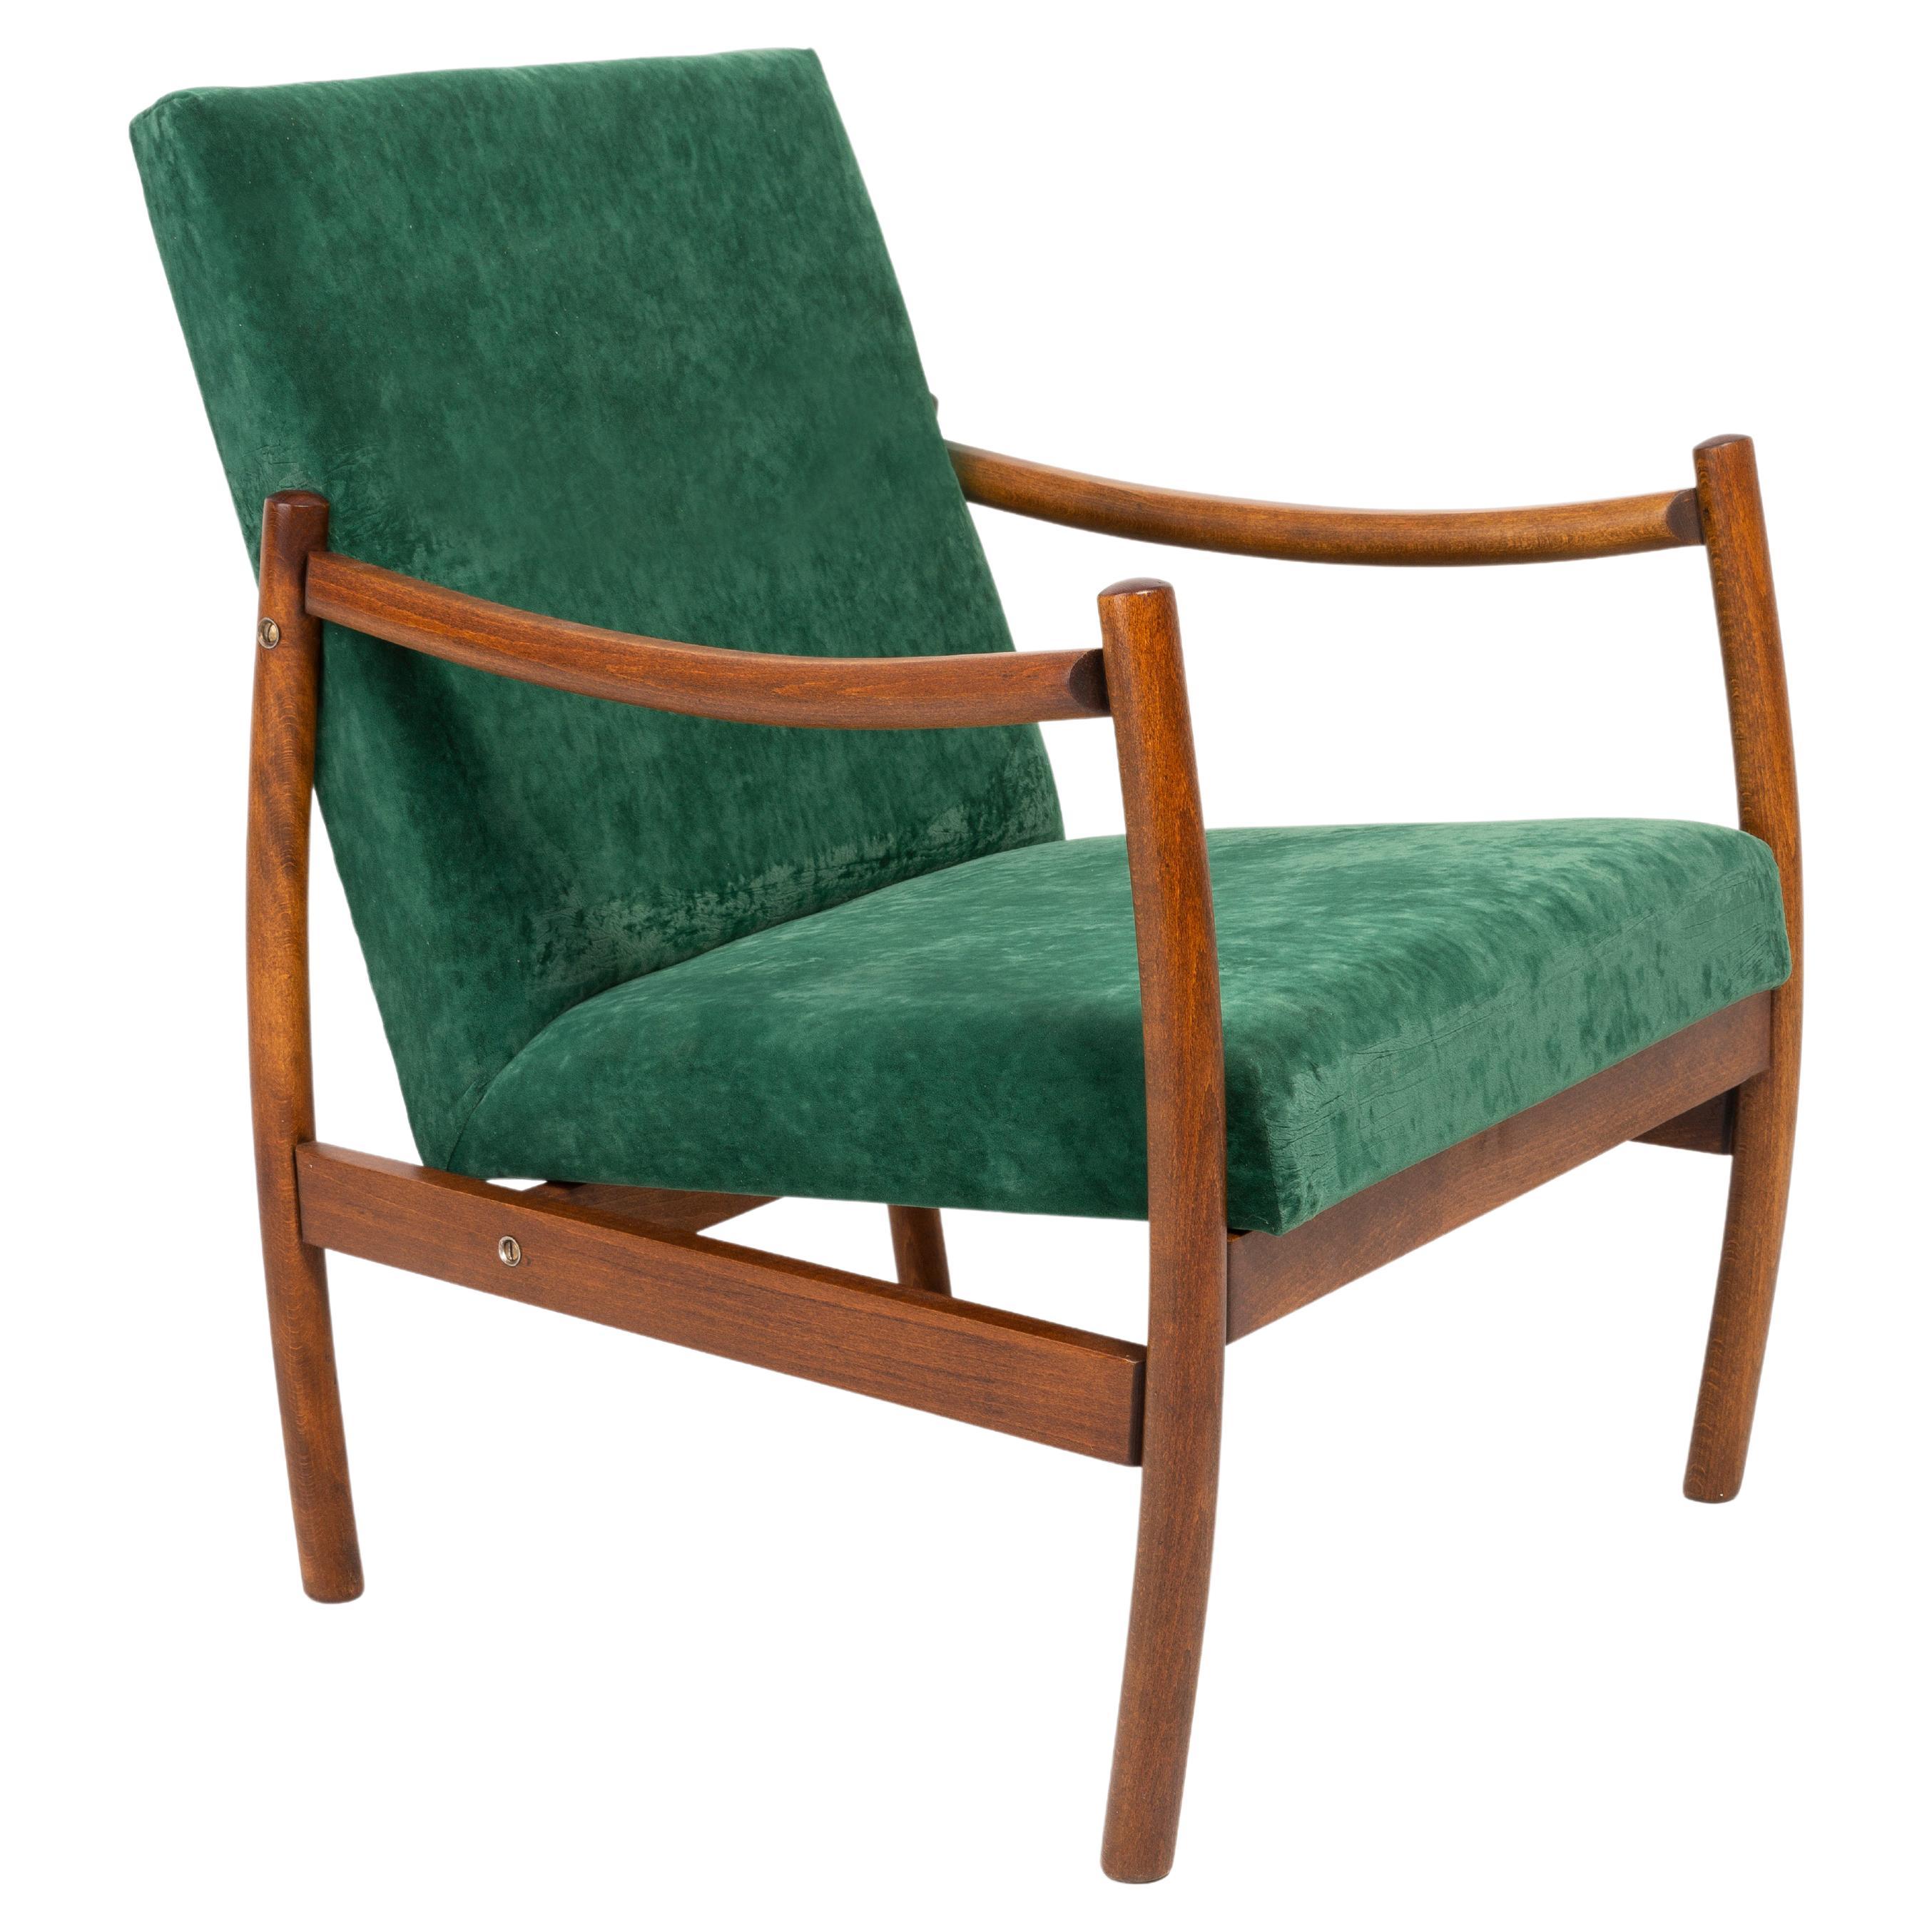 Vintage-Sessel aus der Mitte des 20. Jahrhunderts, dunkelgrüner Samt, Europa, 1960er Jahre